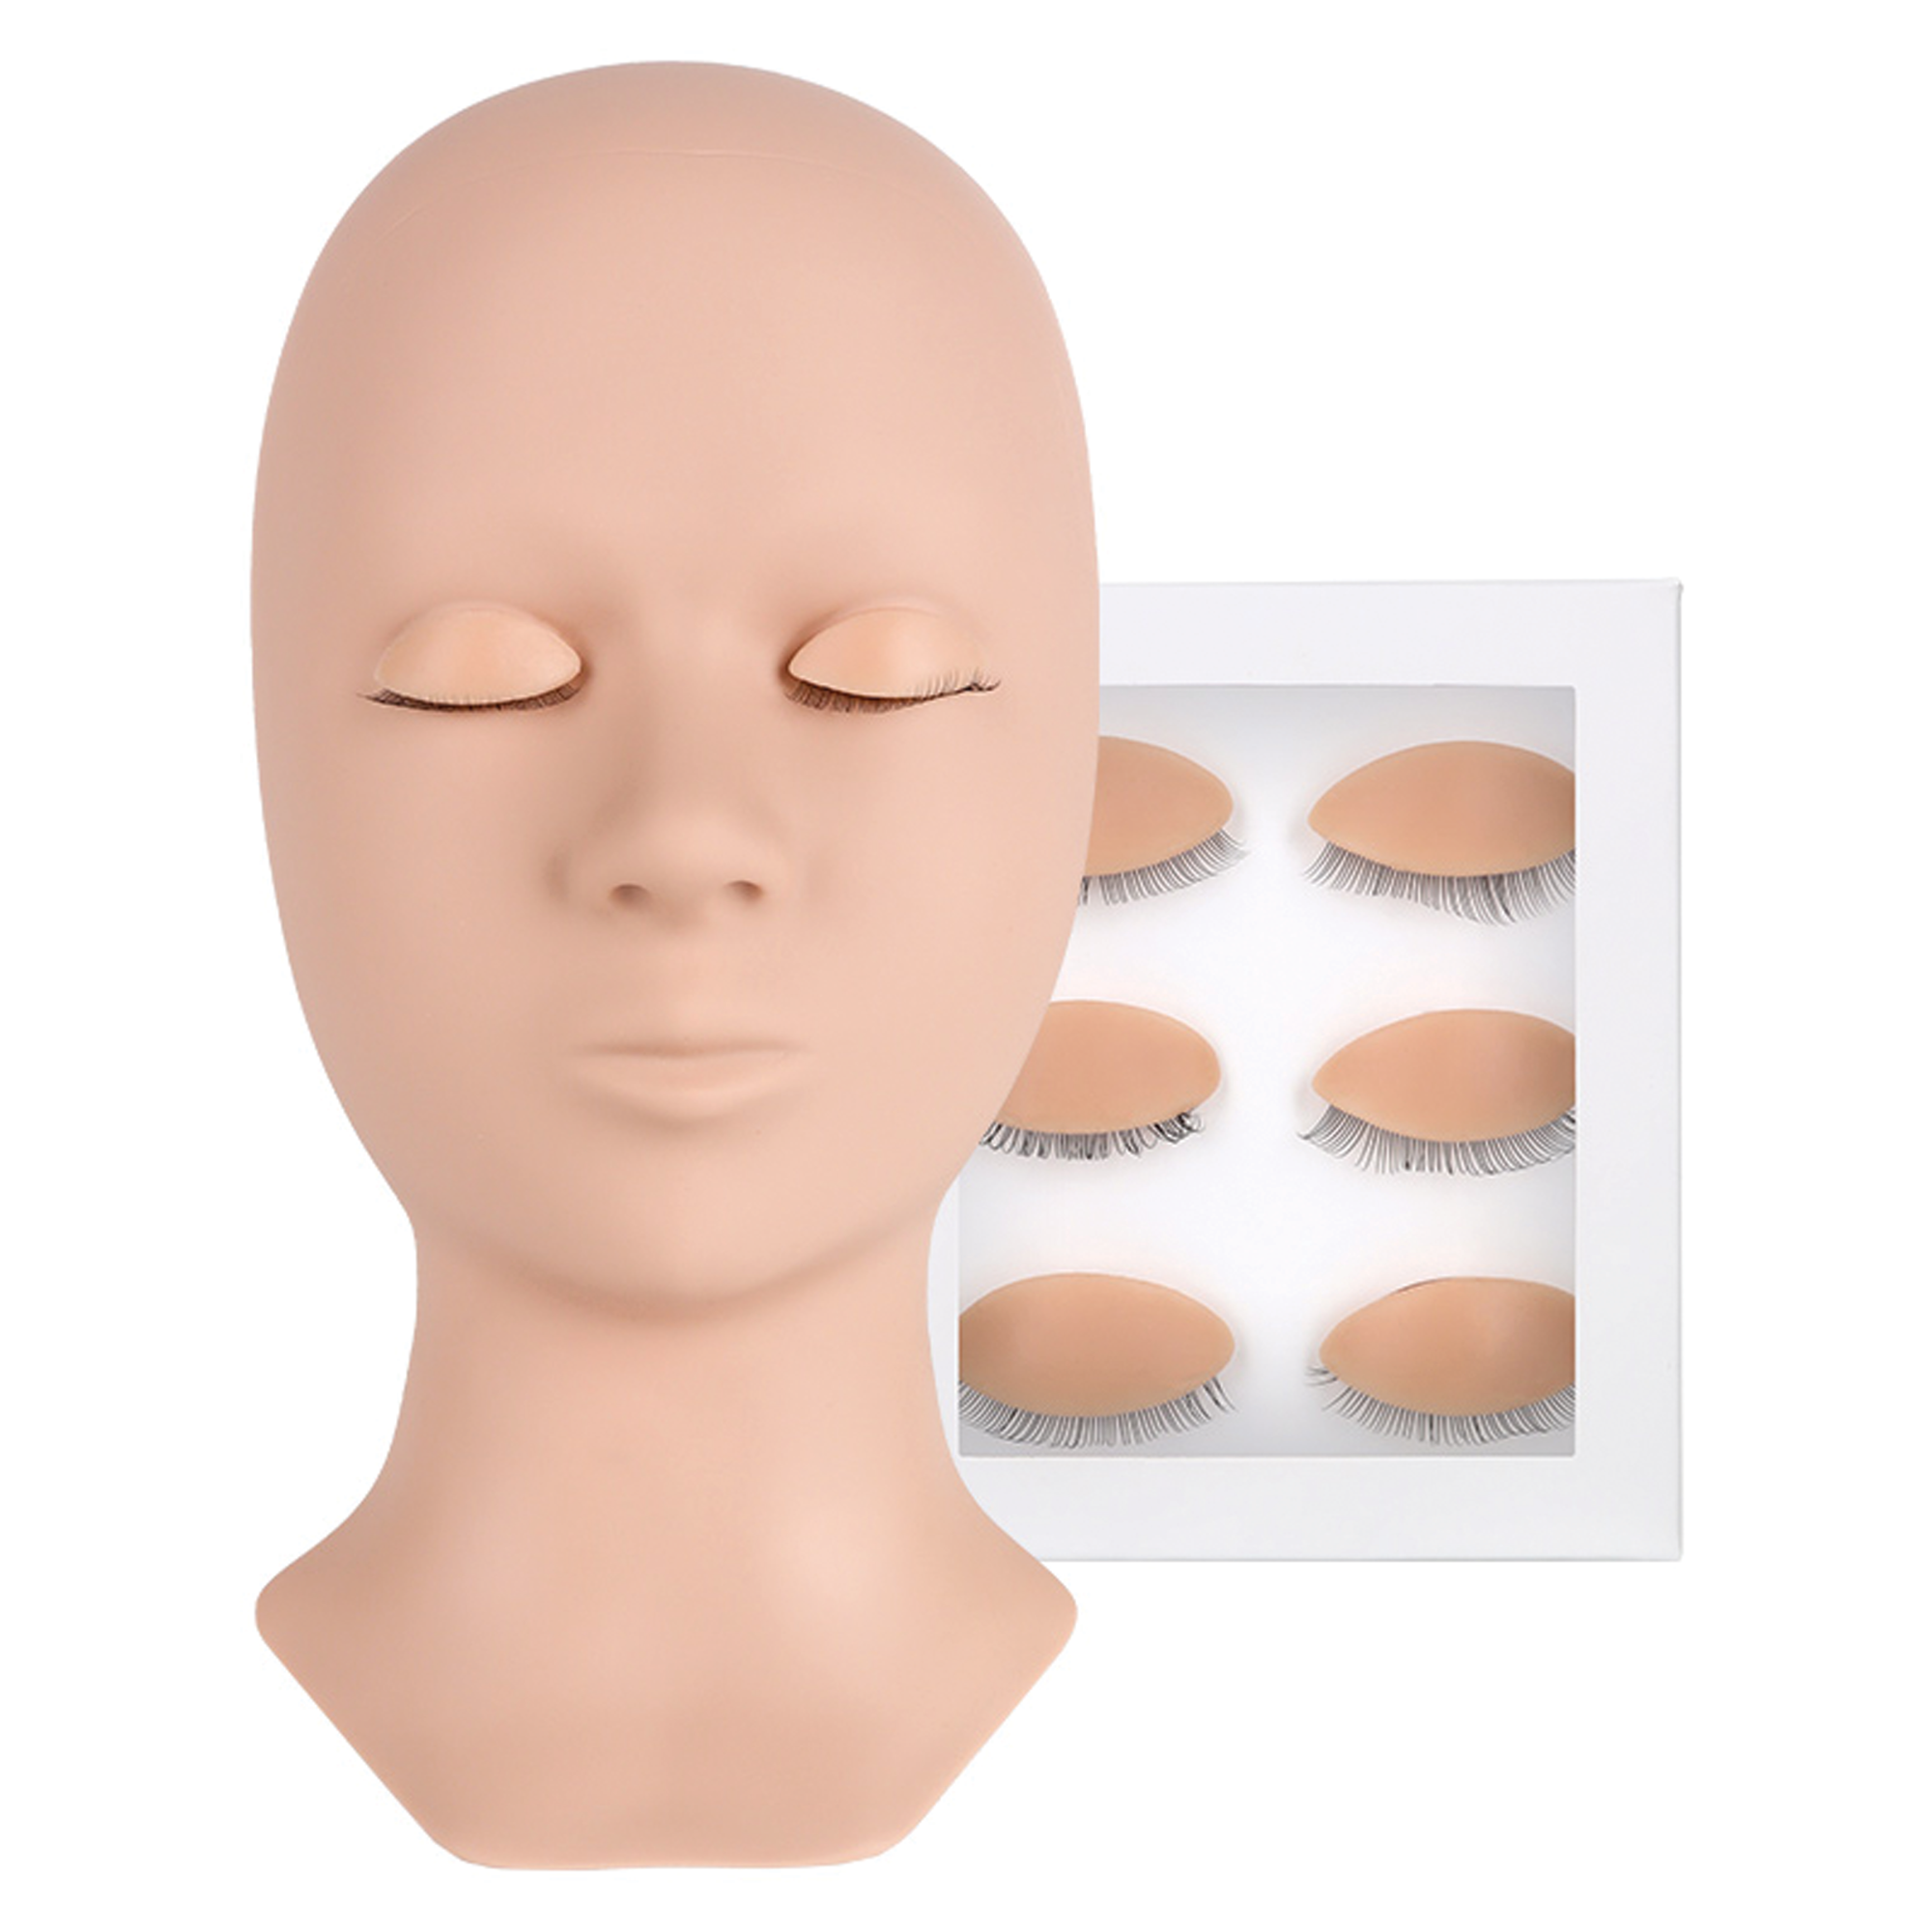 Advanced Training Mannequin Head Kit